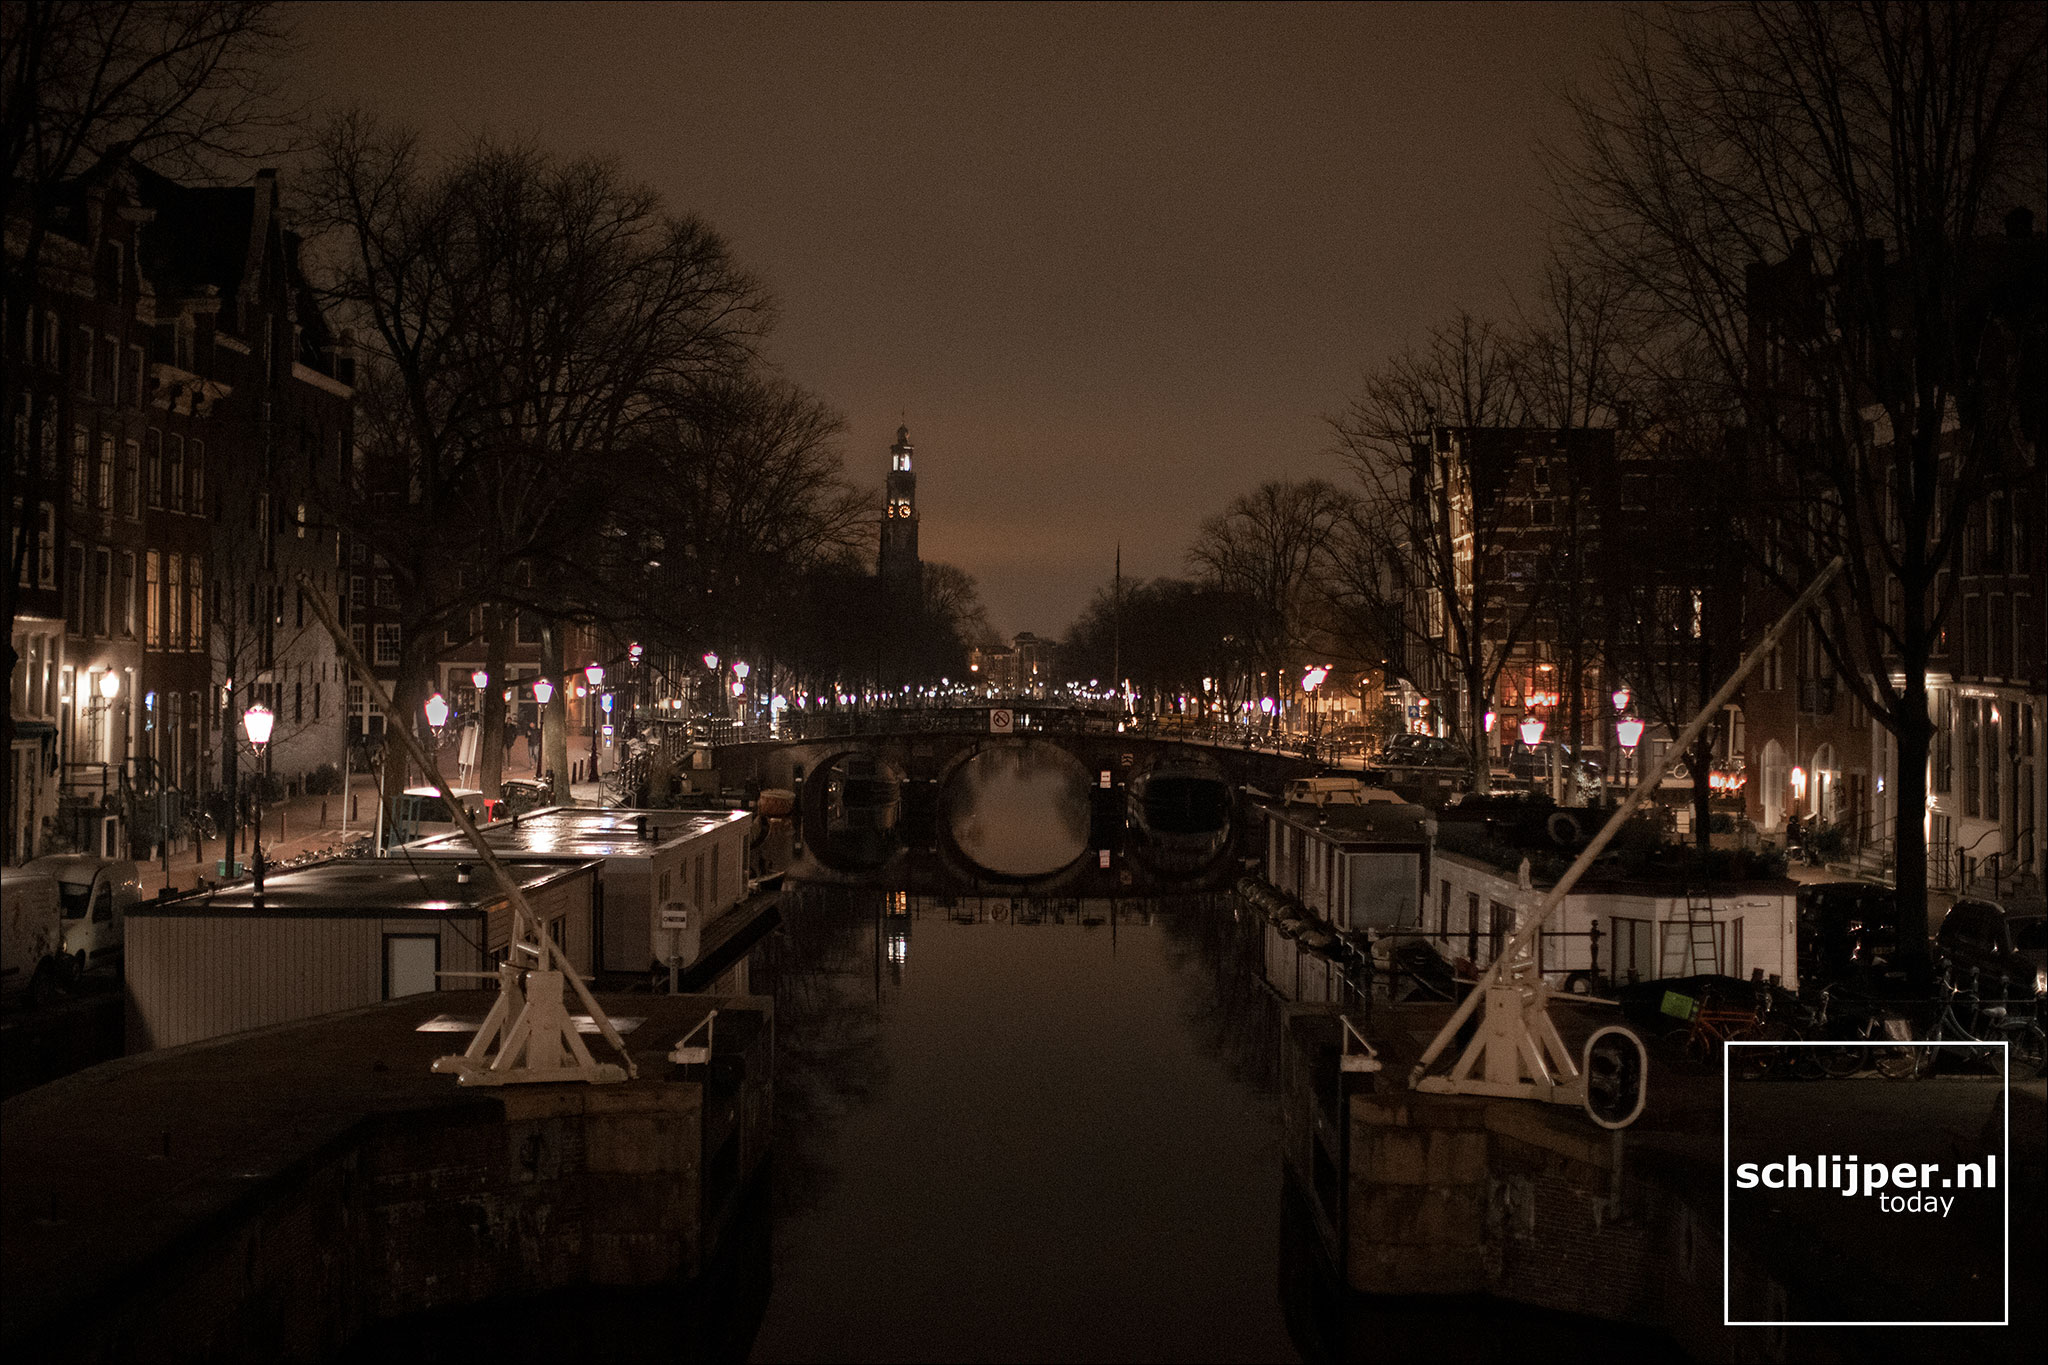 The Netherlands, Amsterdam, 6 januari 2020